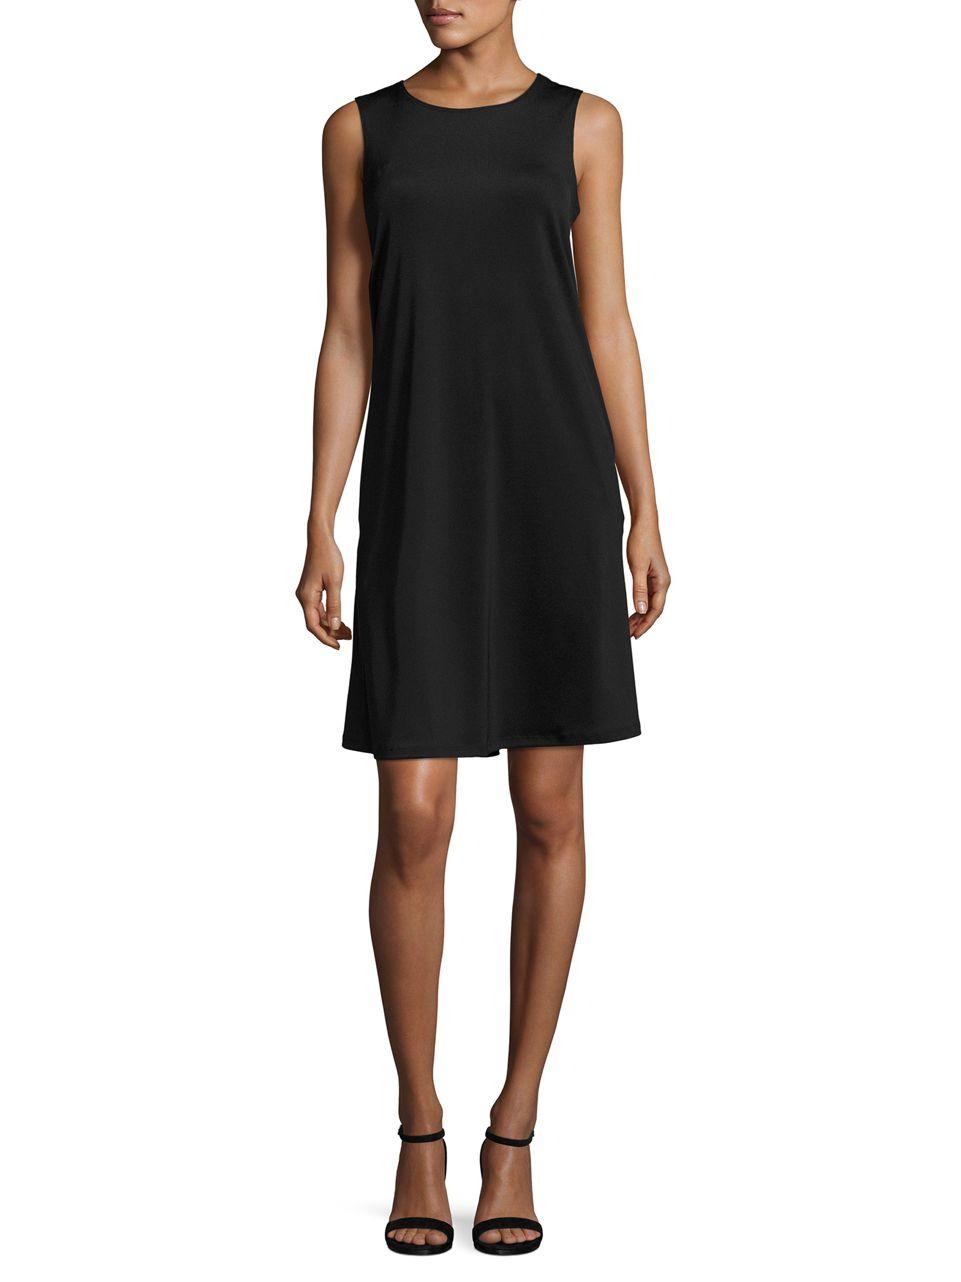 Nipon boutique Knit Shift Dress in Black | Lyst